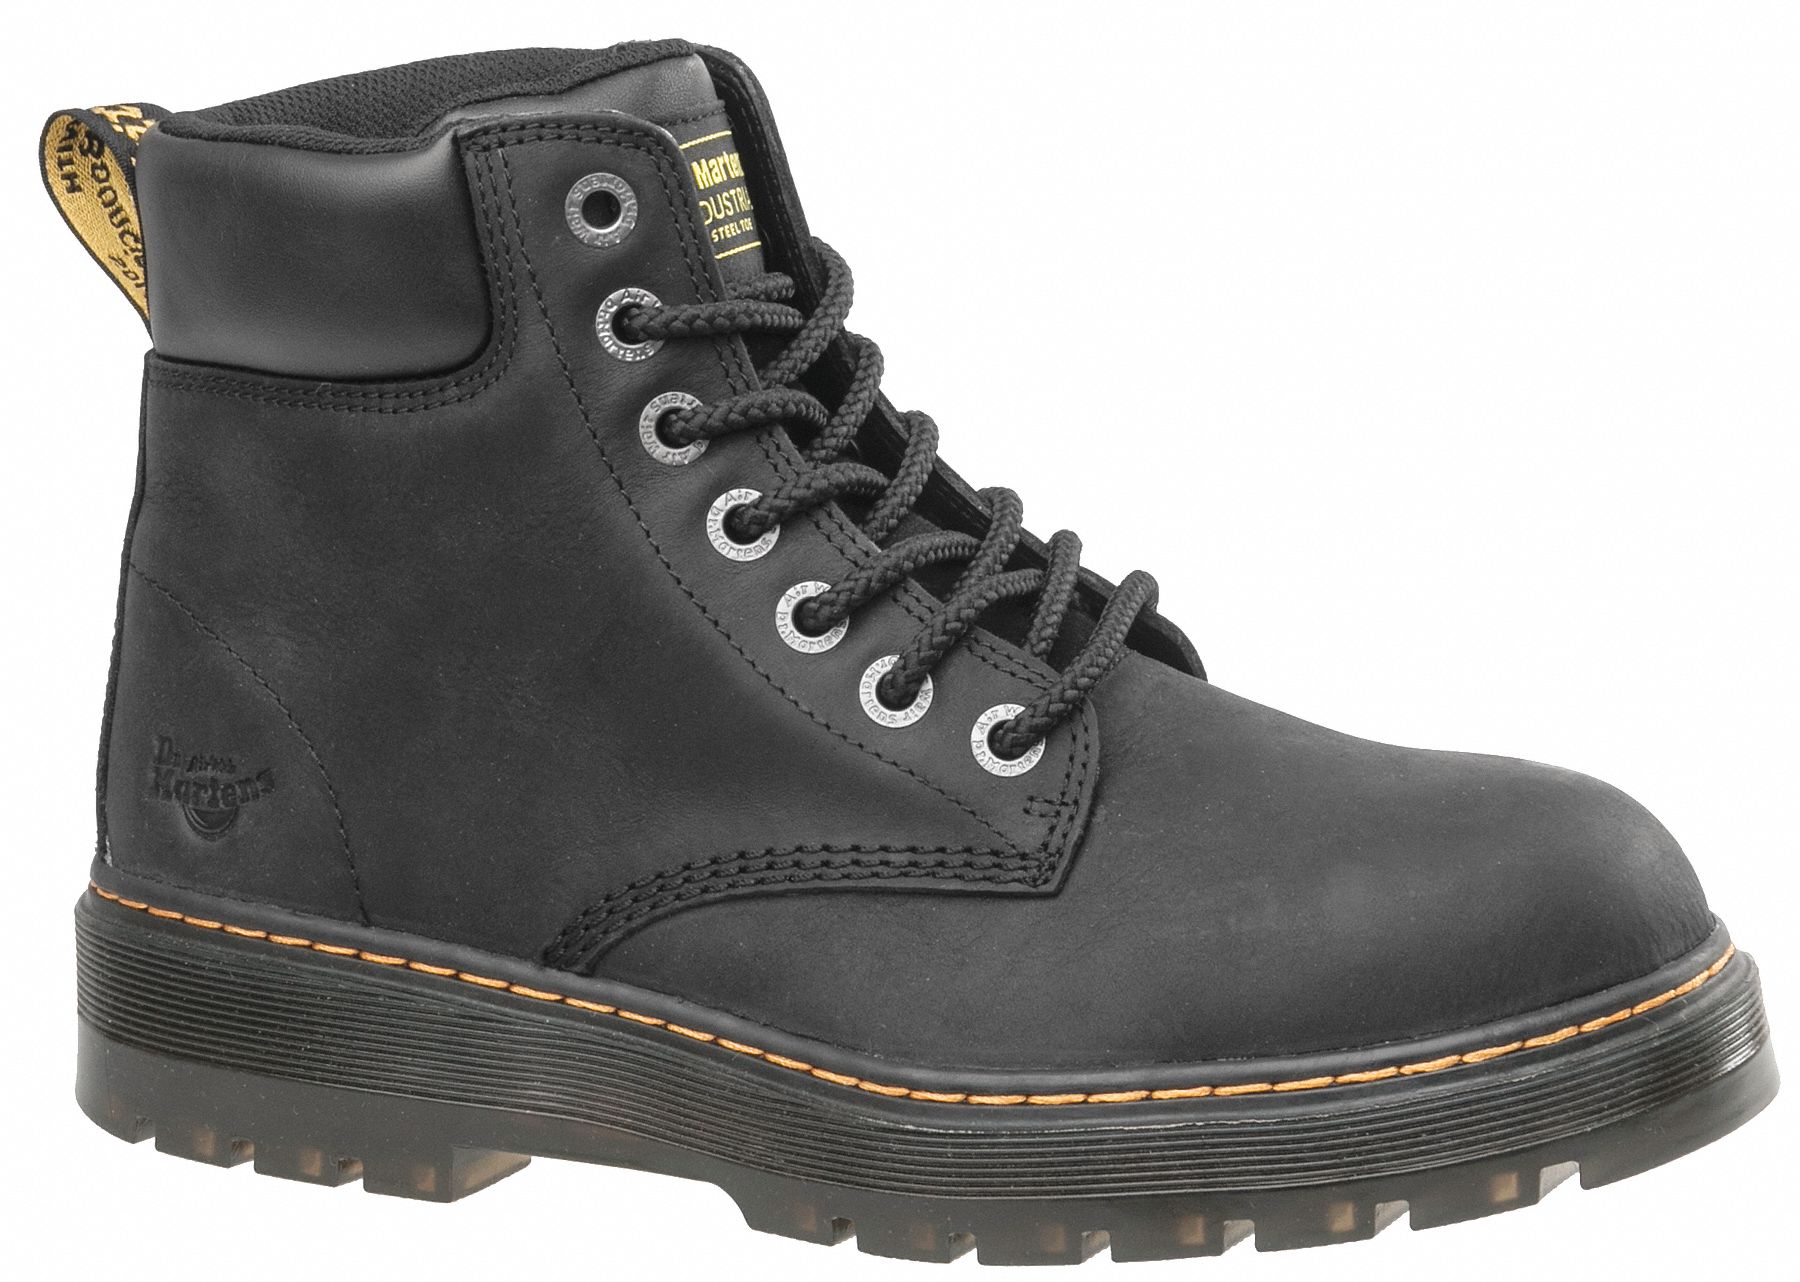 Mens US Size 6 9 10 12 Doc Dr Martens BURNHAM Steel Toe Black Work Boot $140 